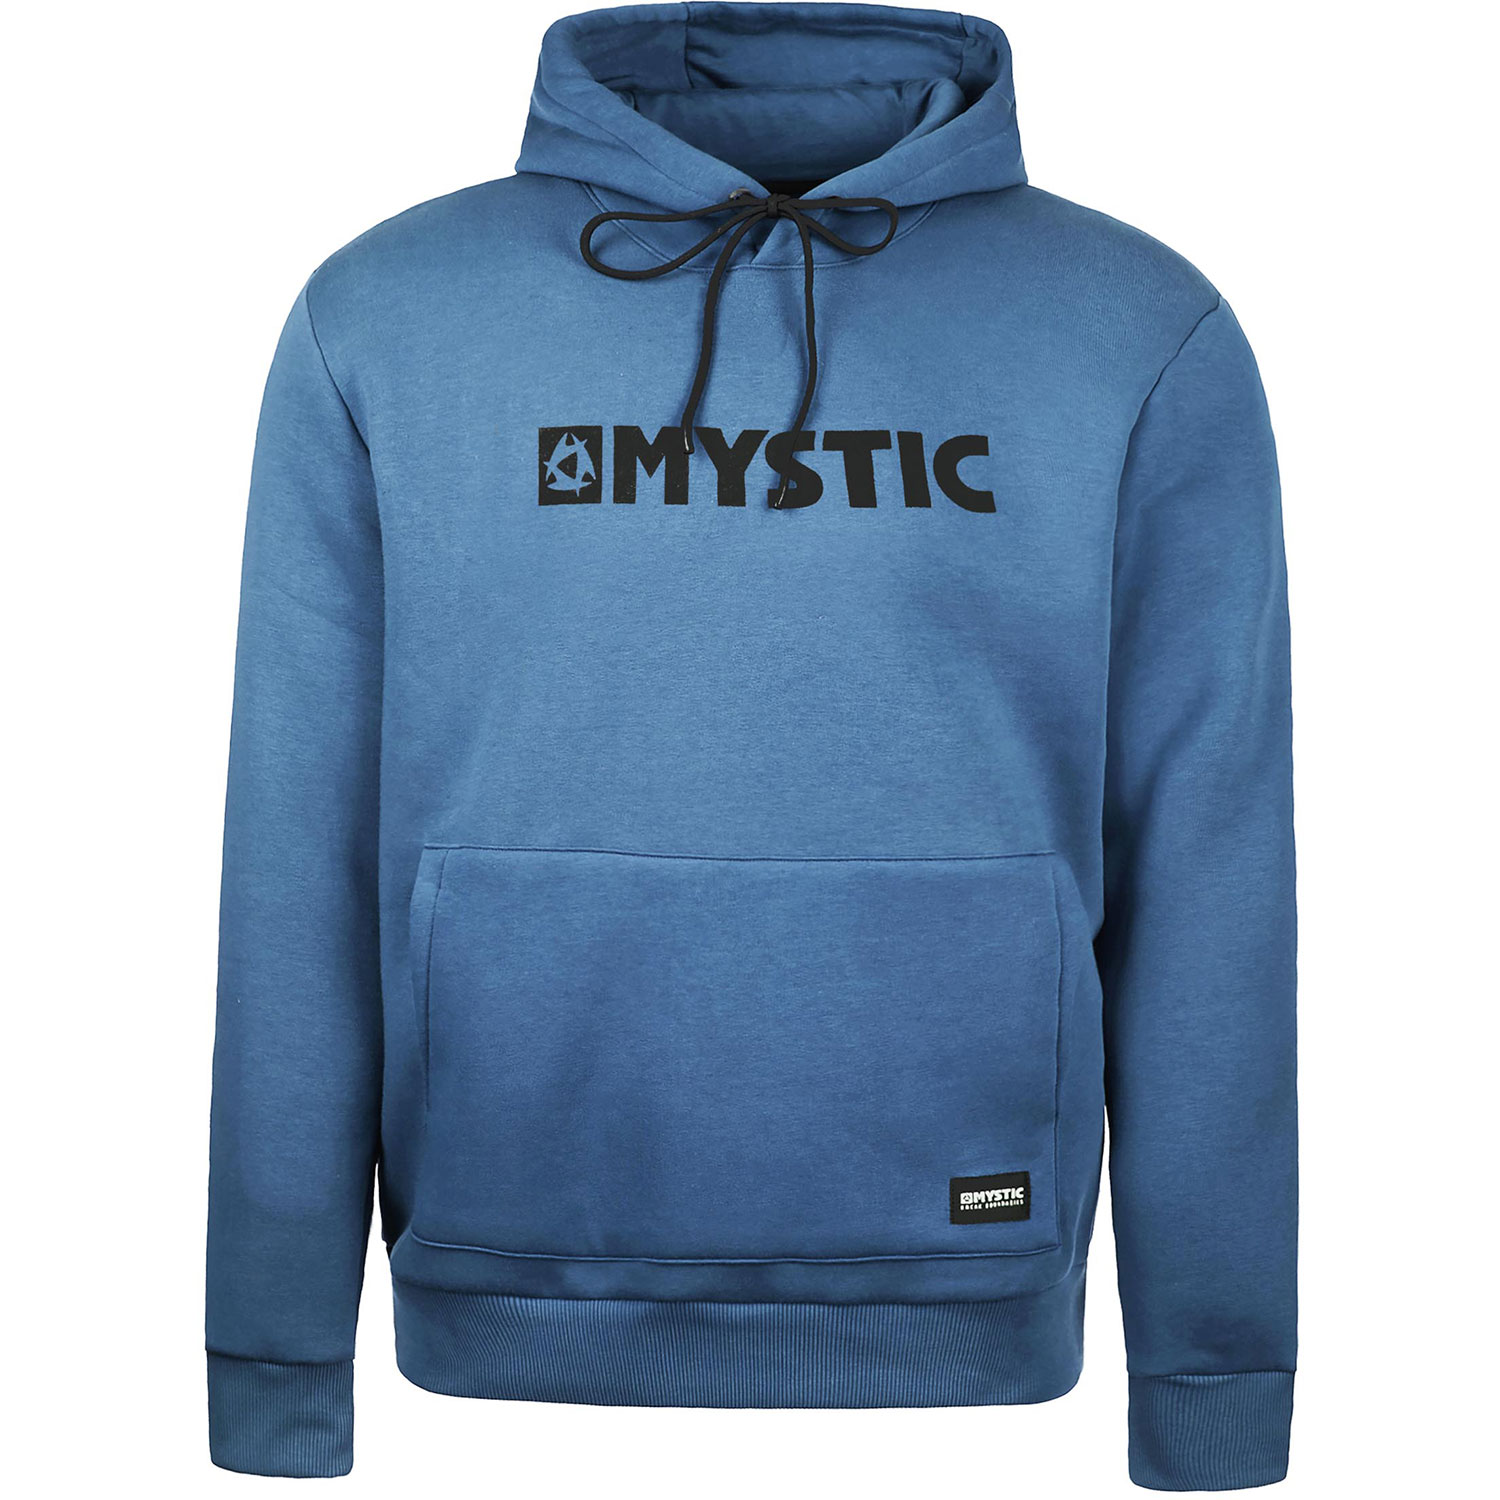 2020 Mystic Brand Hoody - Denim Blue | Coast Water Sports